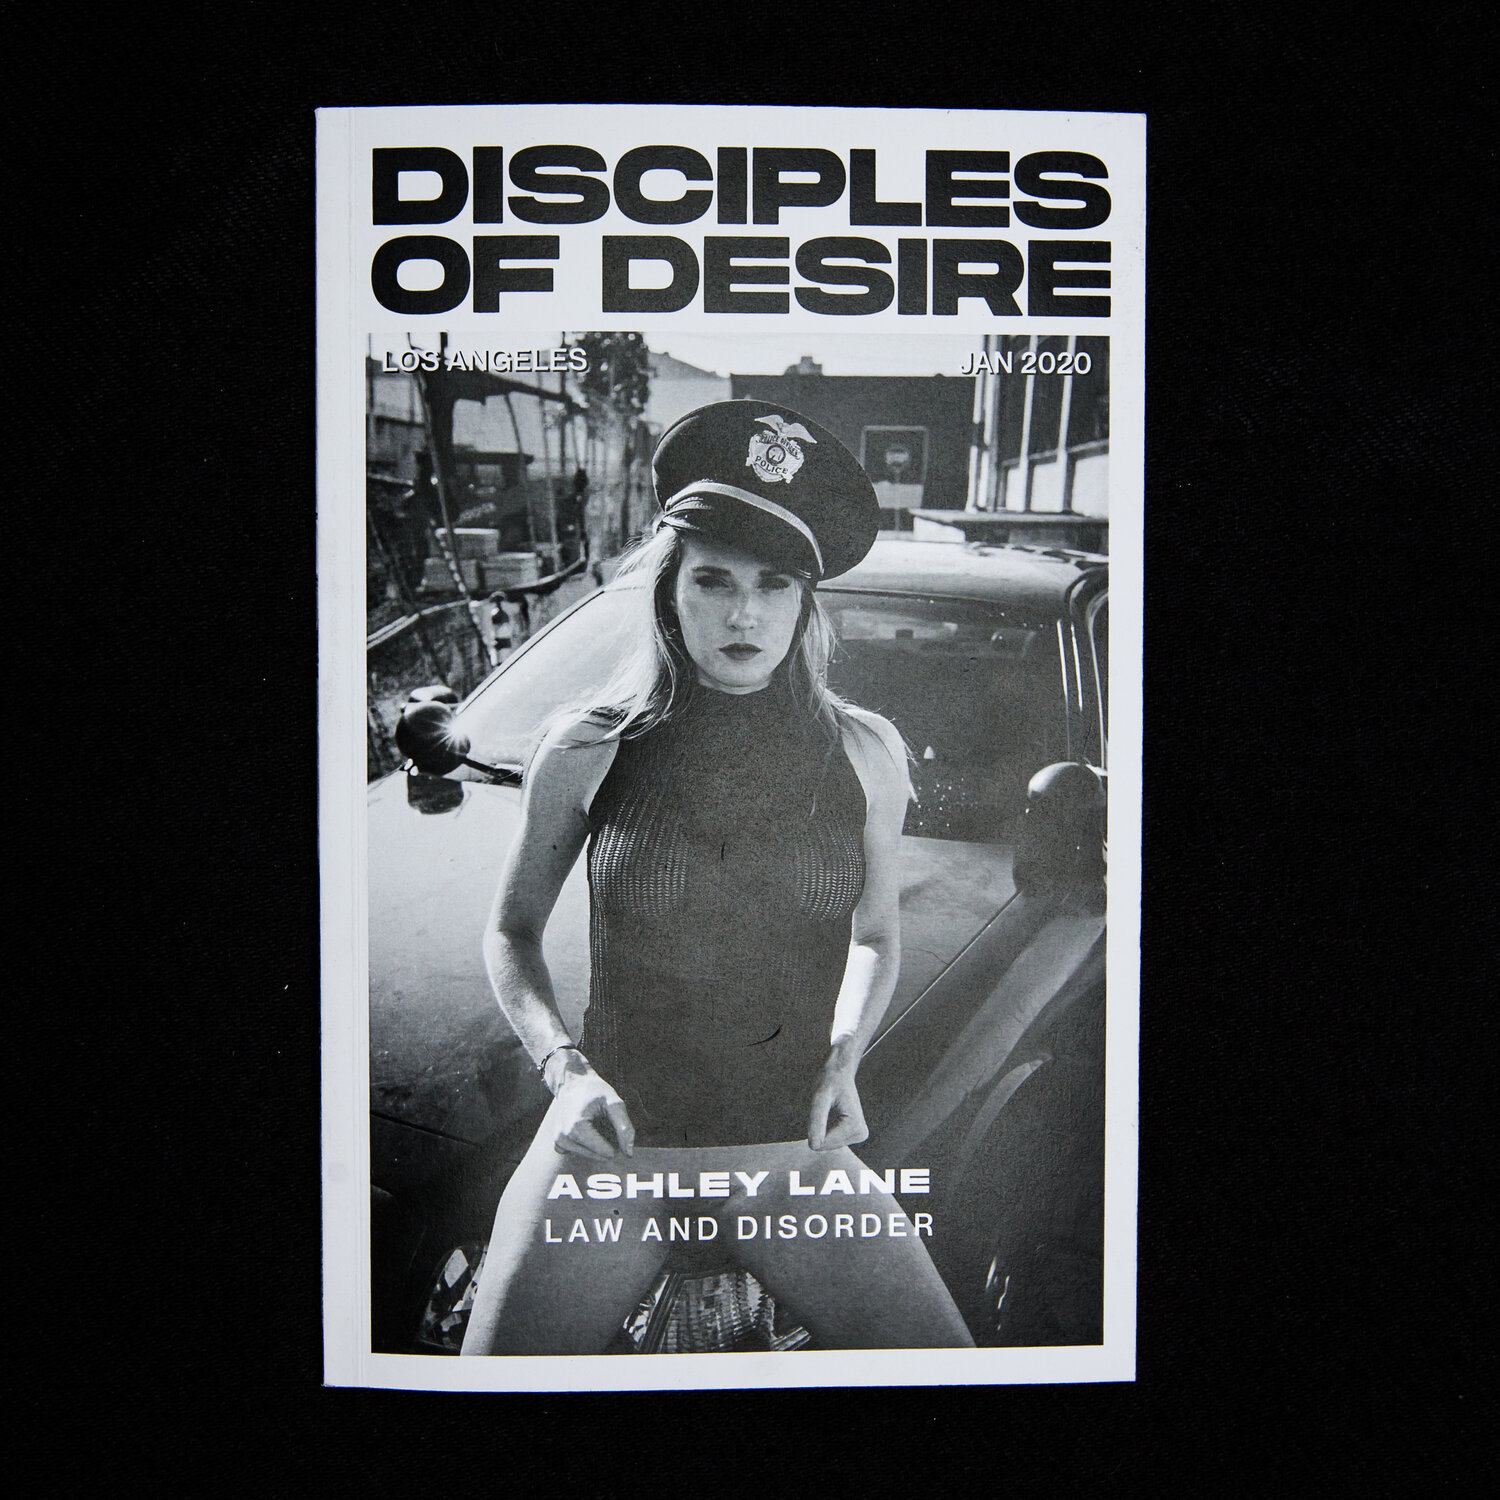 Of desire desciples disciples of